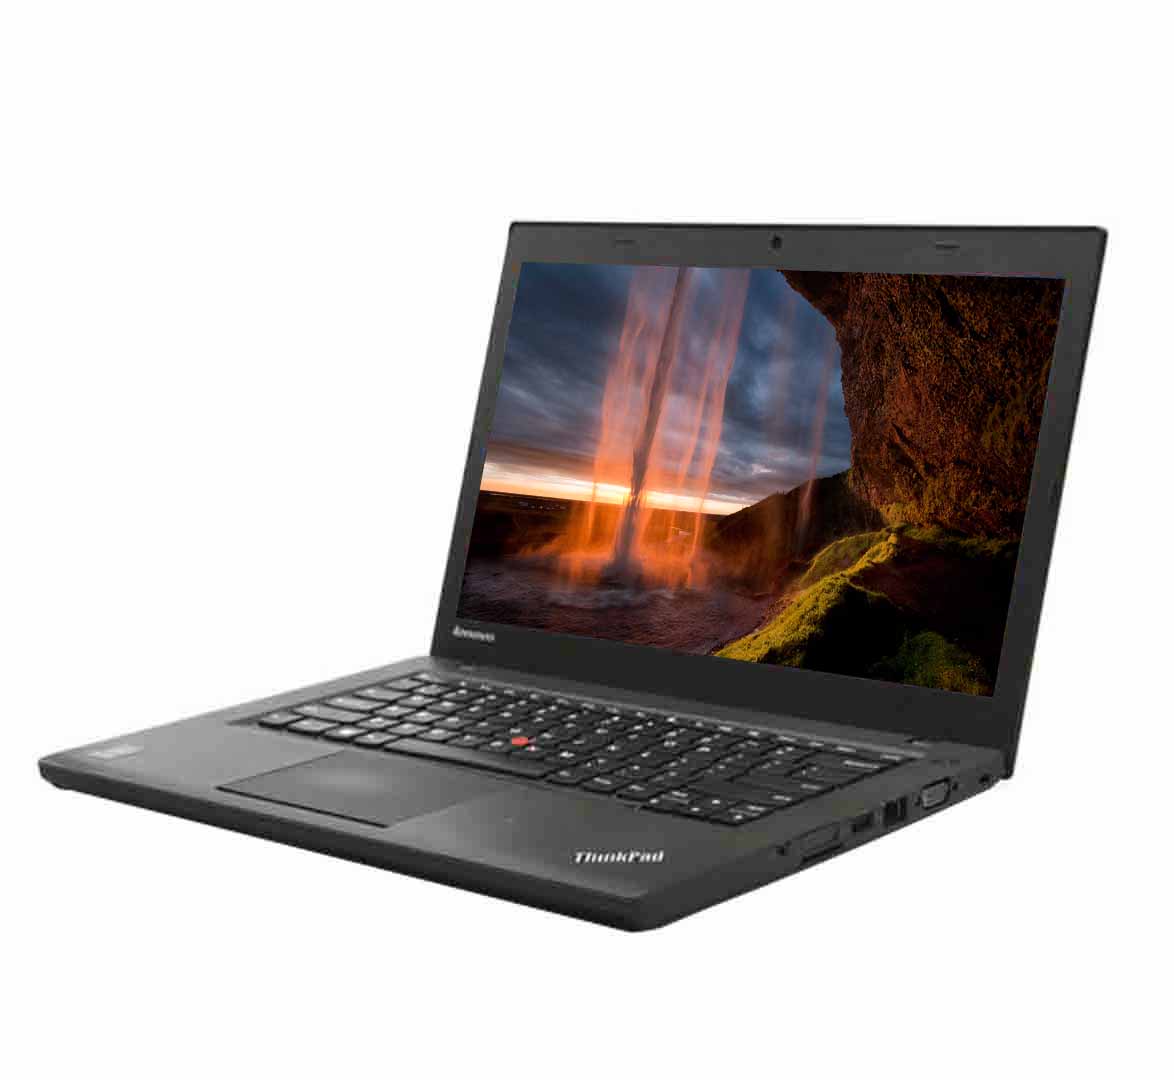 Lenovo ThinkPad T440 Business Laptop, Intel Core i5-4th Gen CPU, 4GB RAM, 500GB HDD, 14 inch Display, Windows 10 Pro